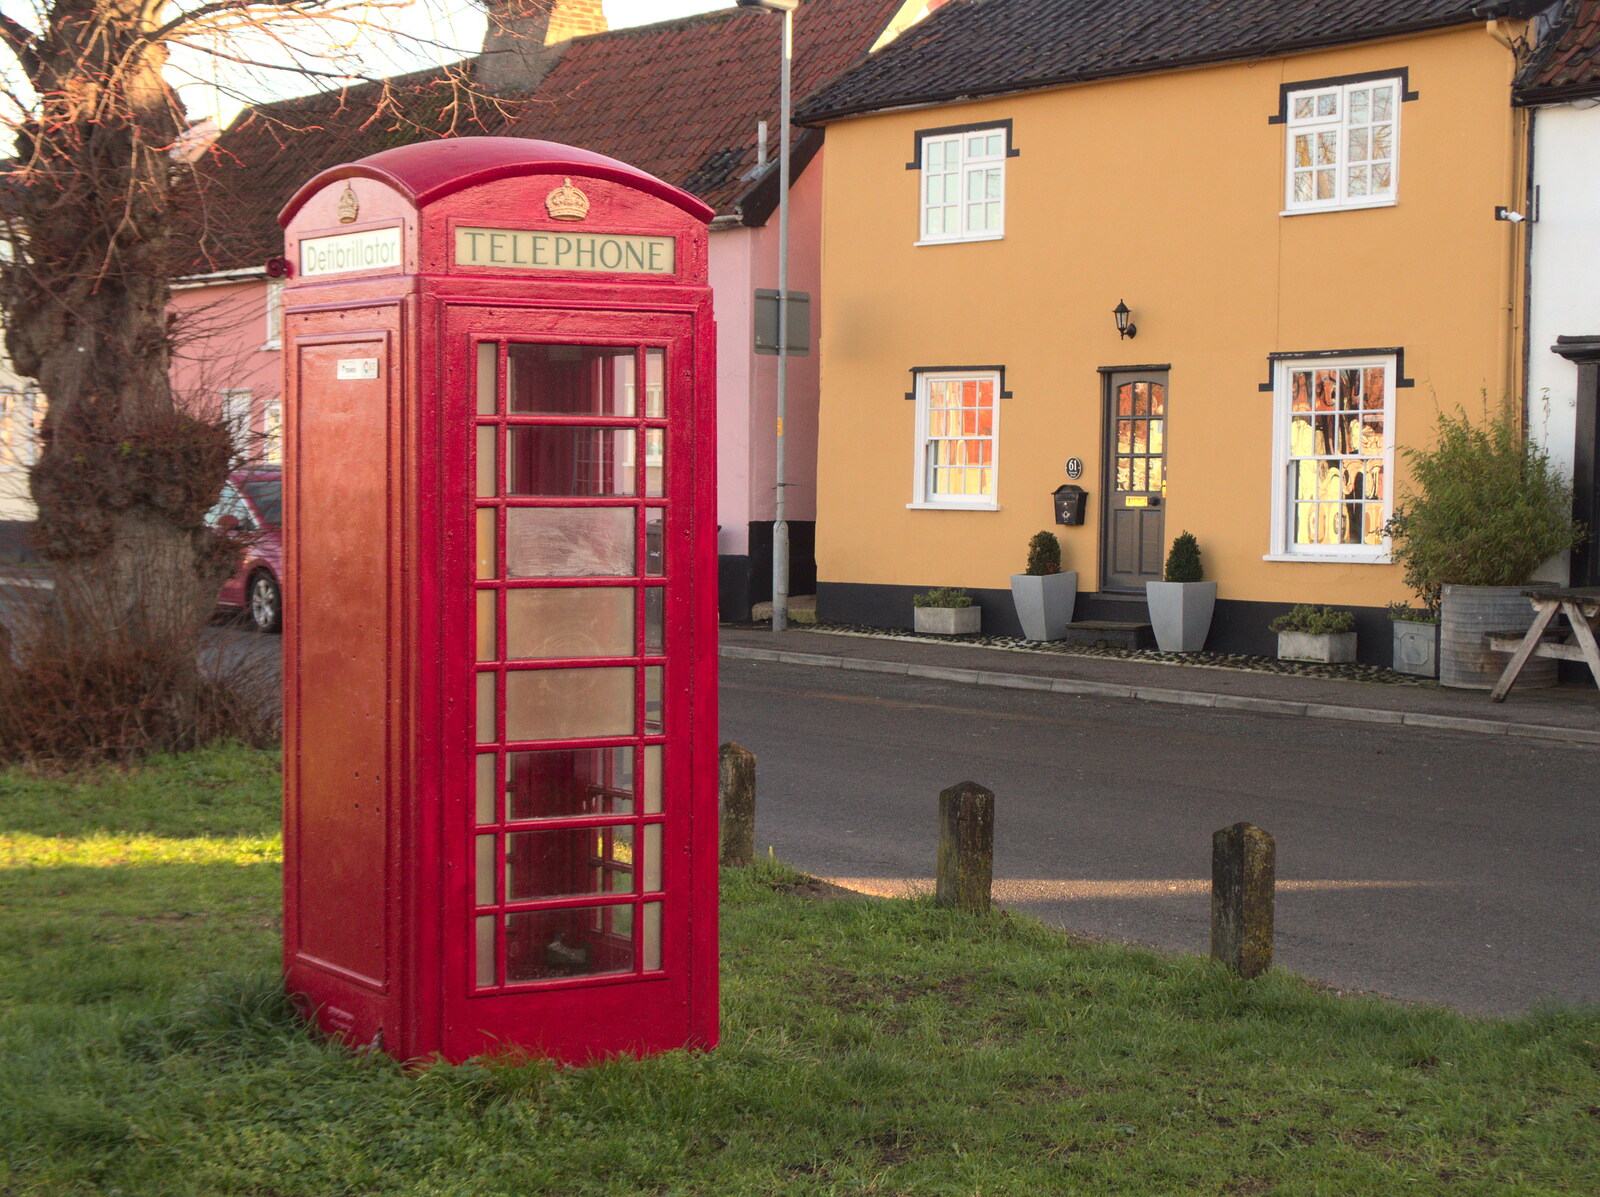 A Wander around Fair Green, Diss, Norfolk - 11th January 2023: A K6 phonebox is now a defibrillator unit